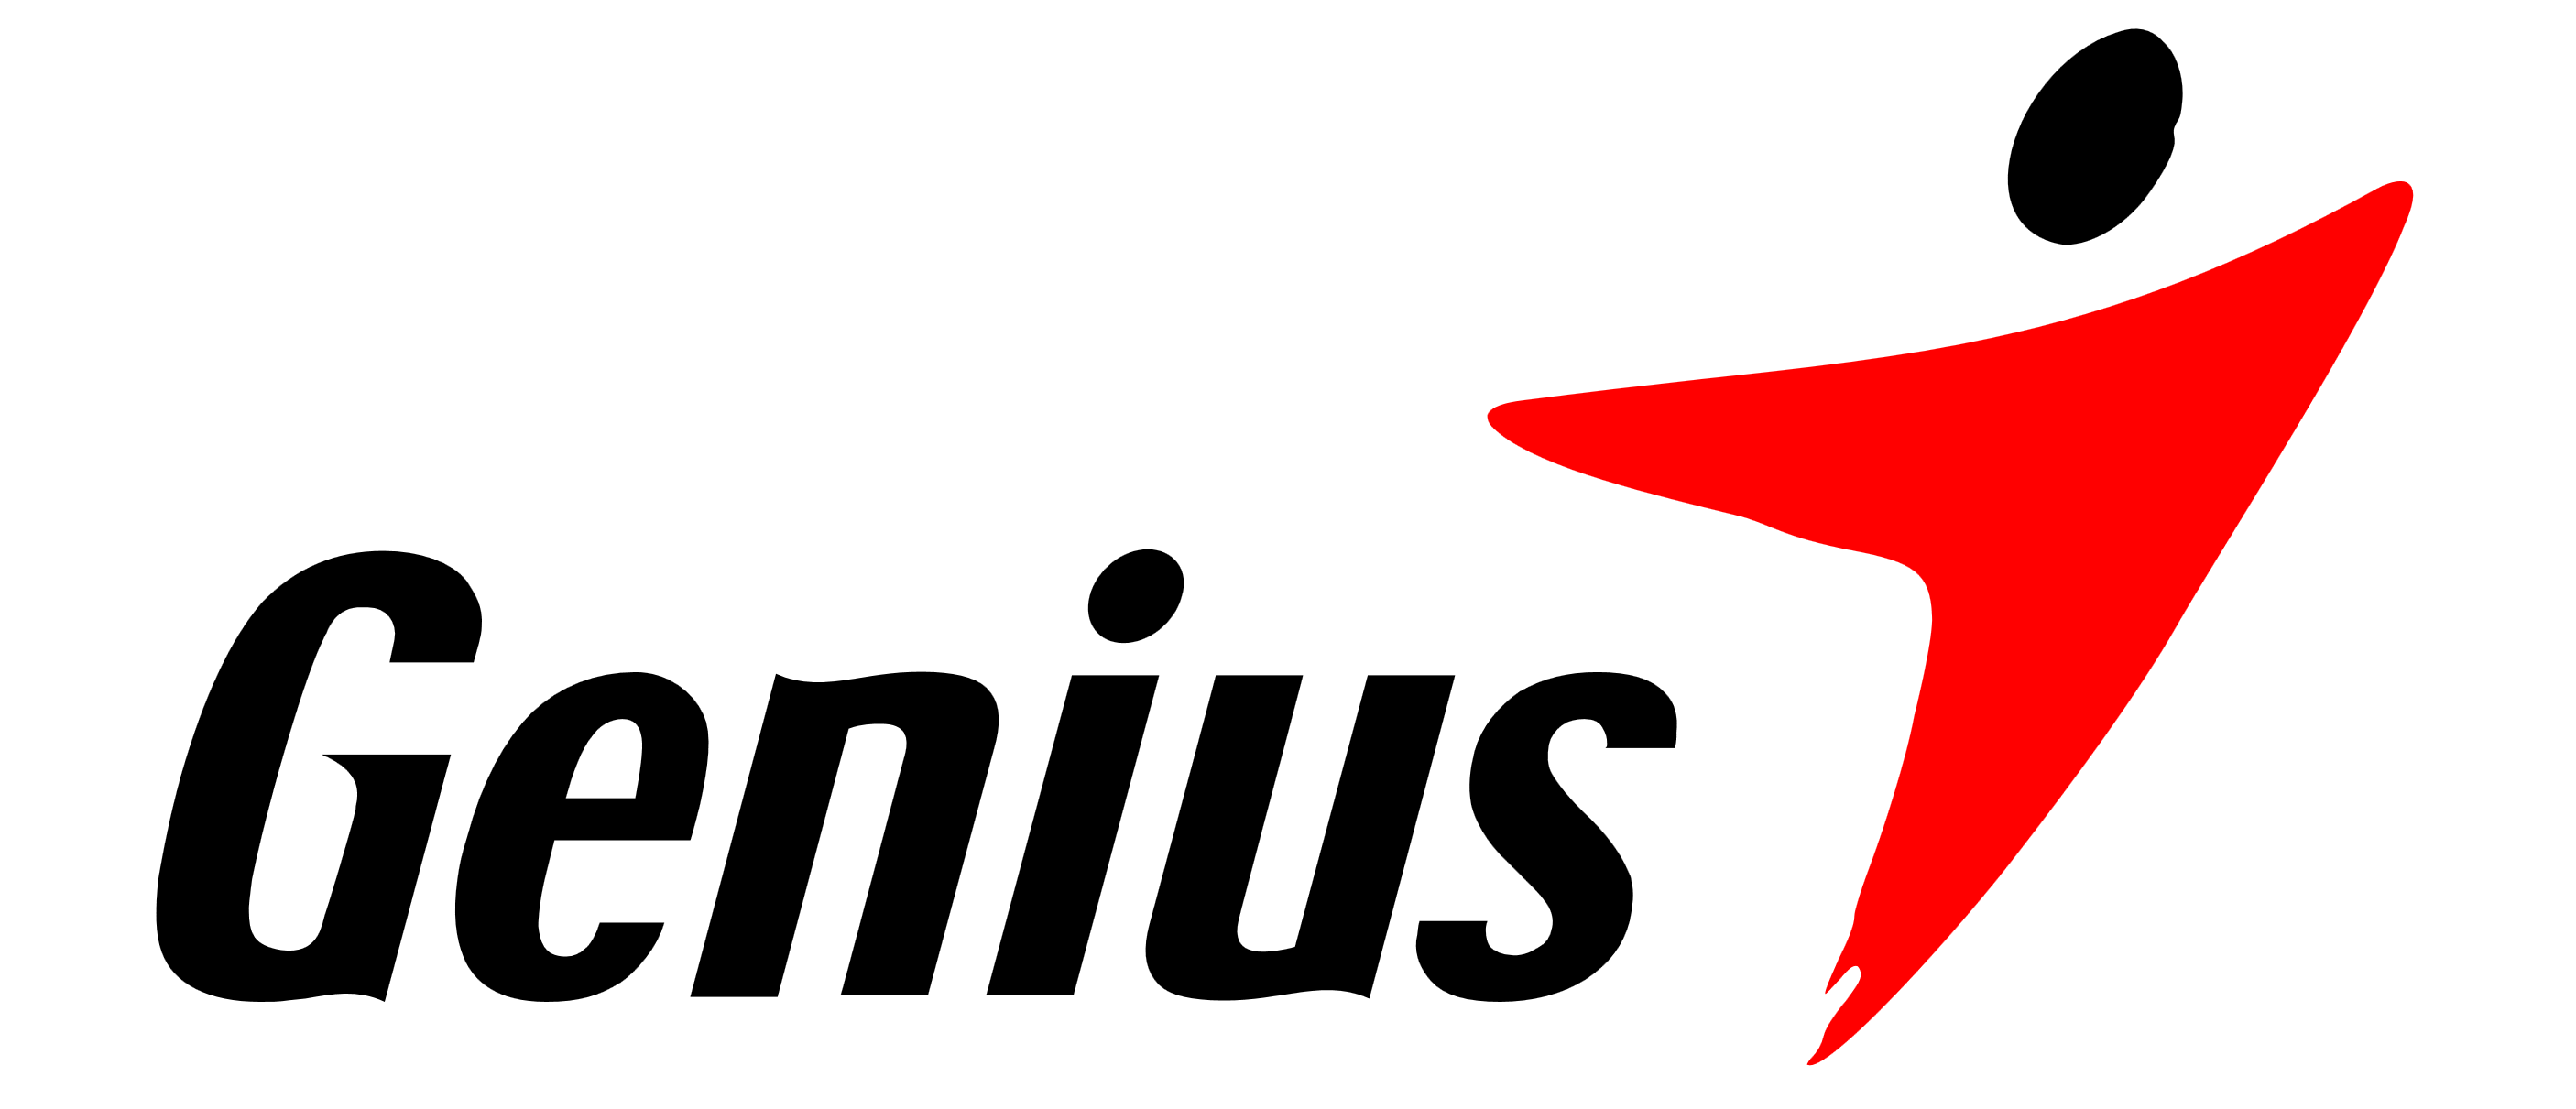 Genius logo, logotype